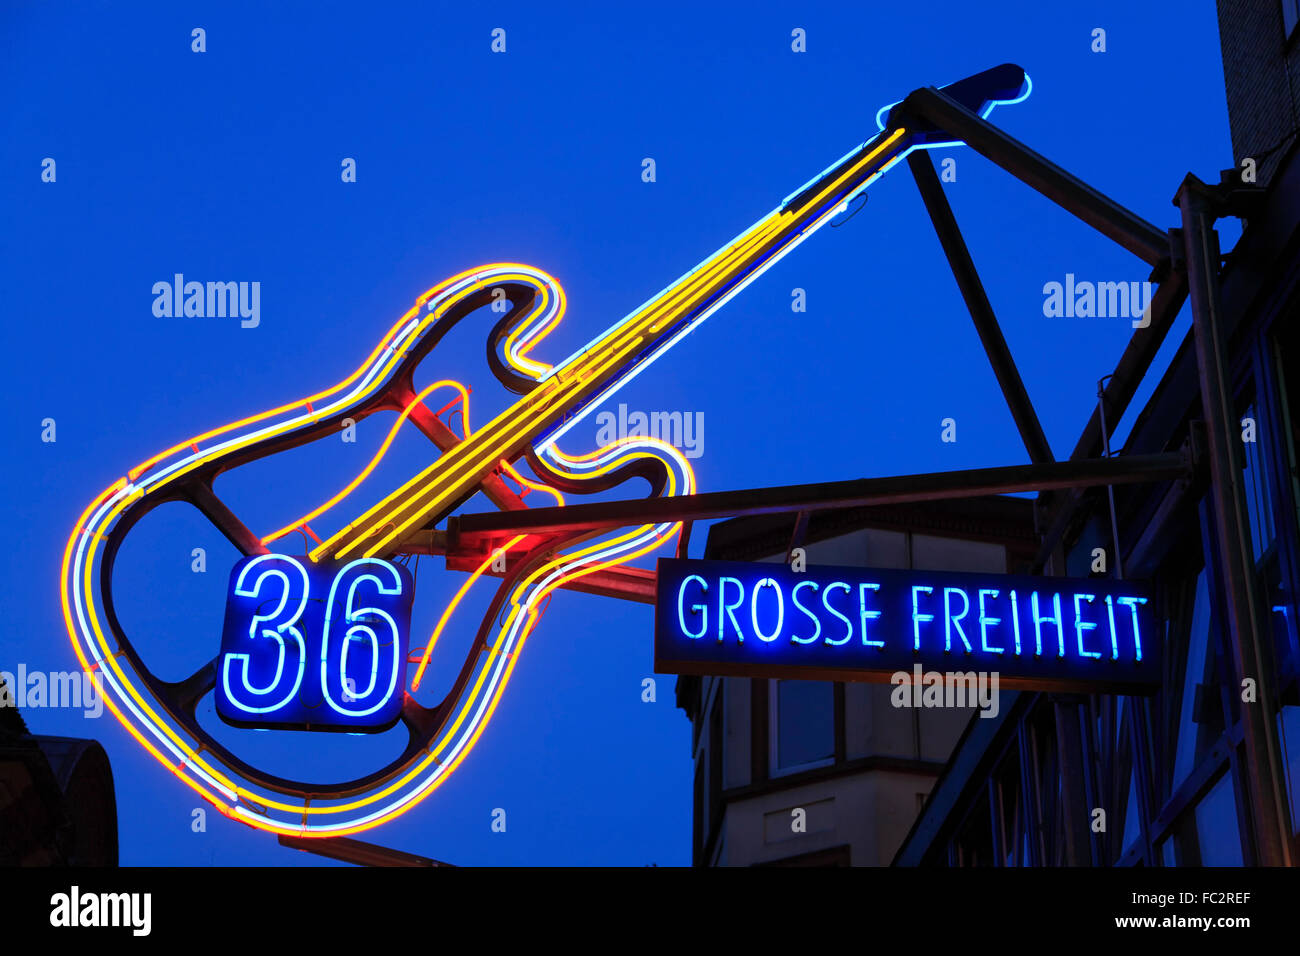 Redlight district St. Pauli, Music Club Grosse Freiheit 36 near Reeperbahn, Hamburg, Germany, Europe Stock Photo